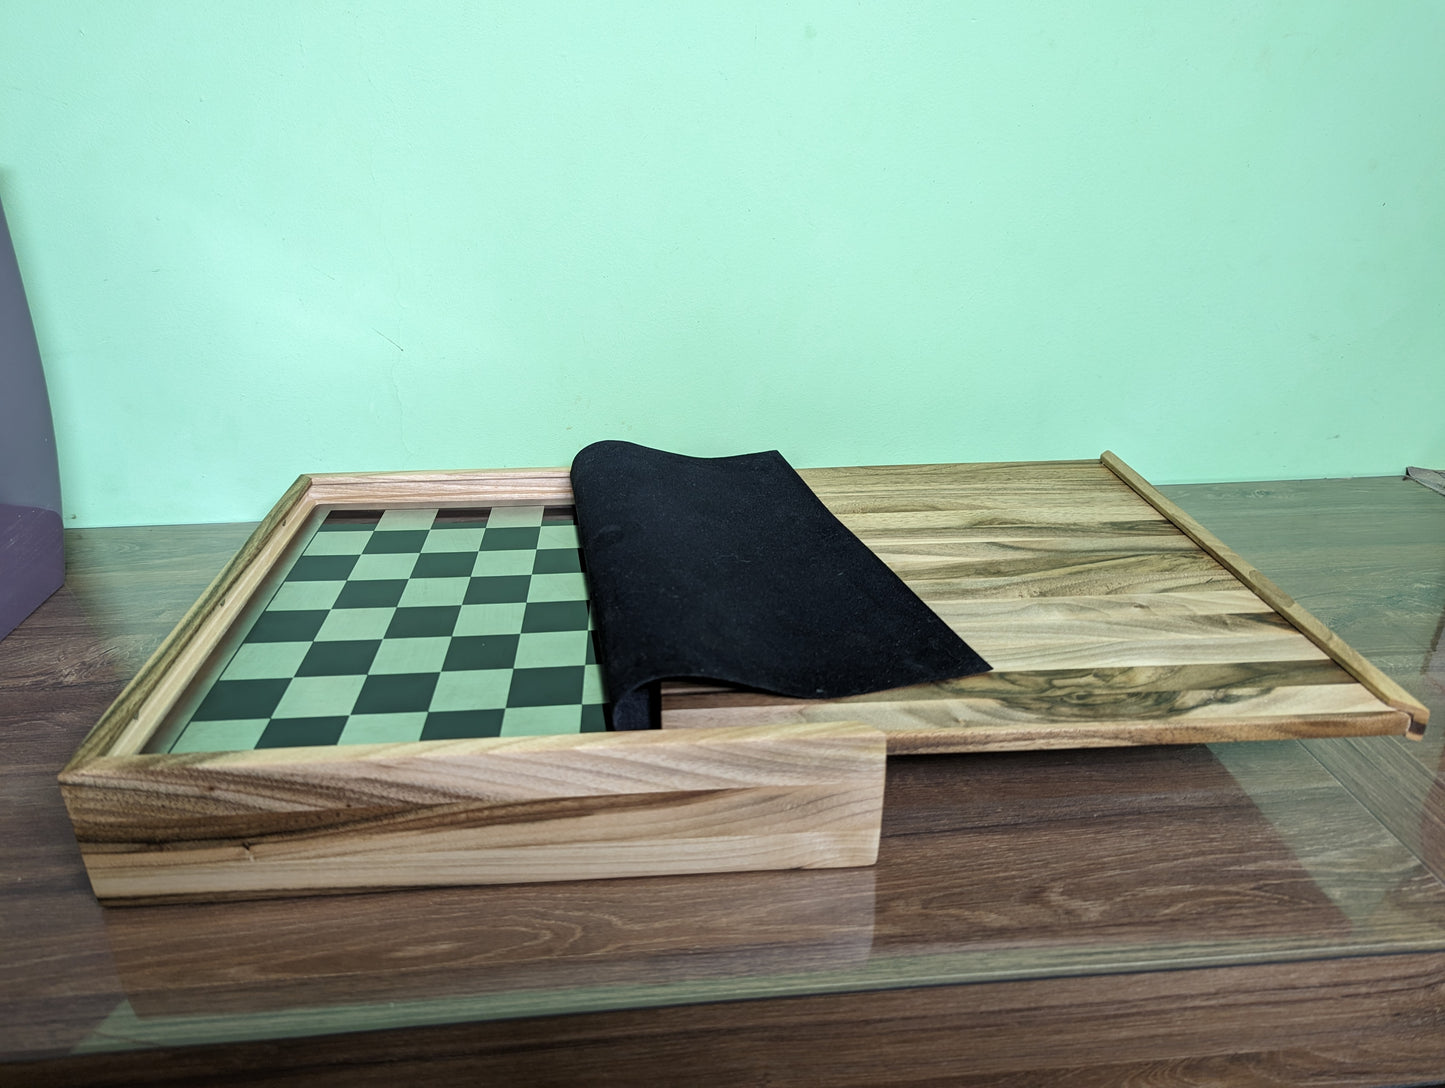 Luxury unusual chess set. Metal animal chess pieces in walnut box